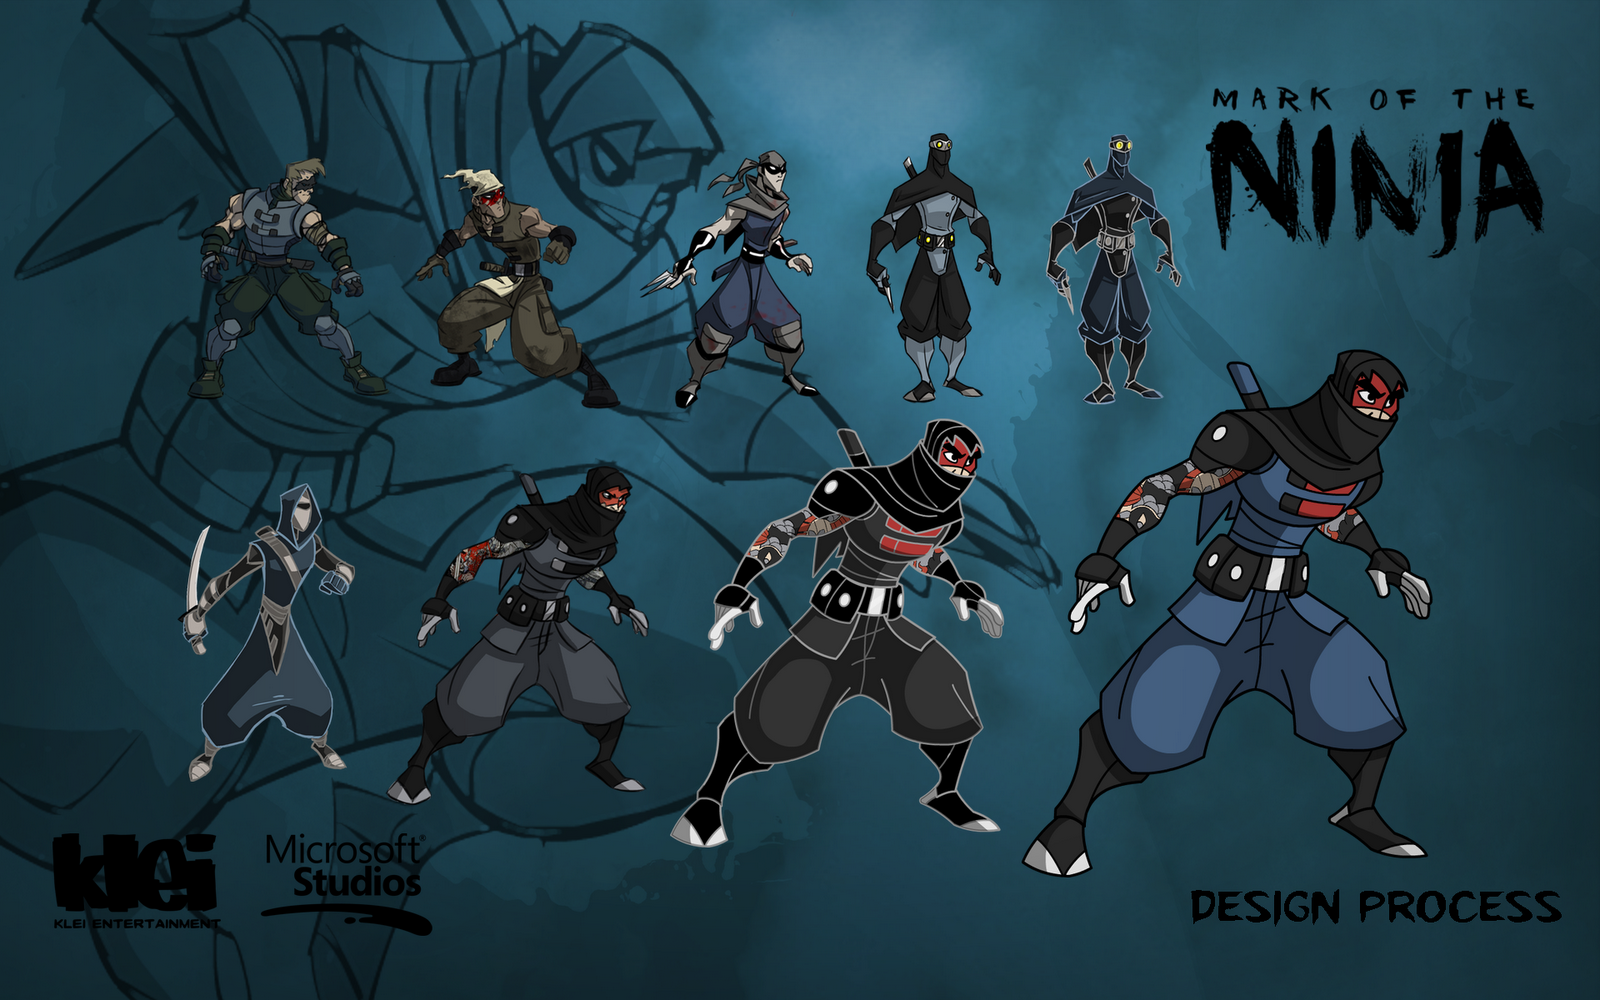 mark of the ninja 91 download free